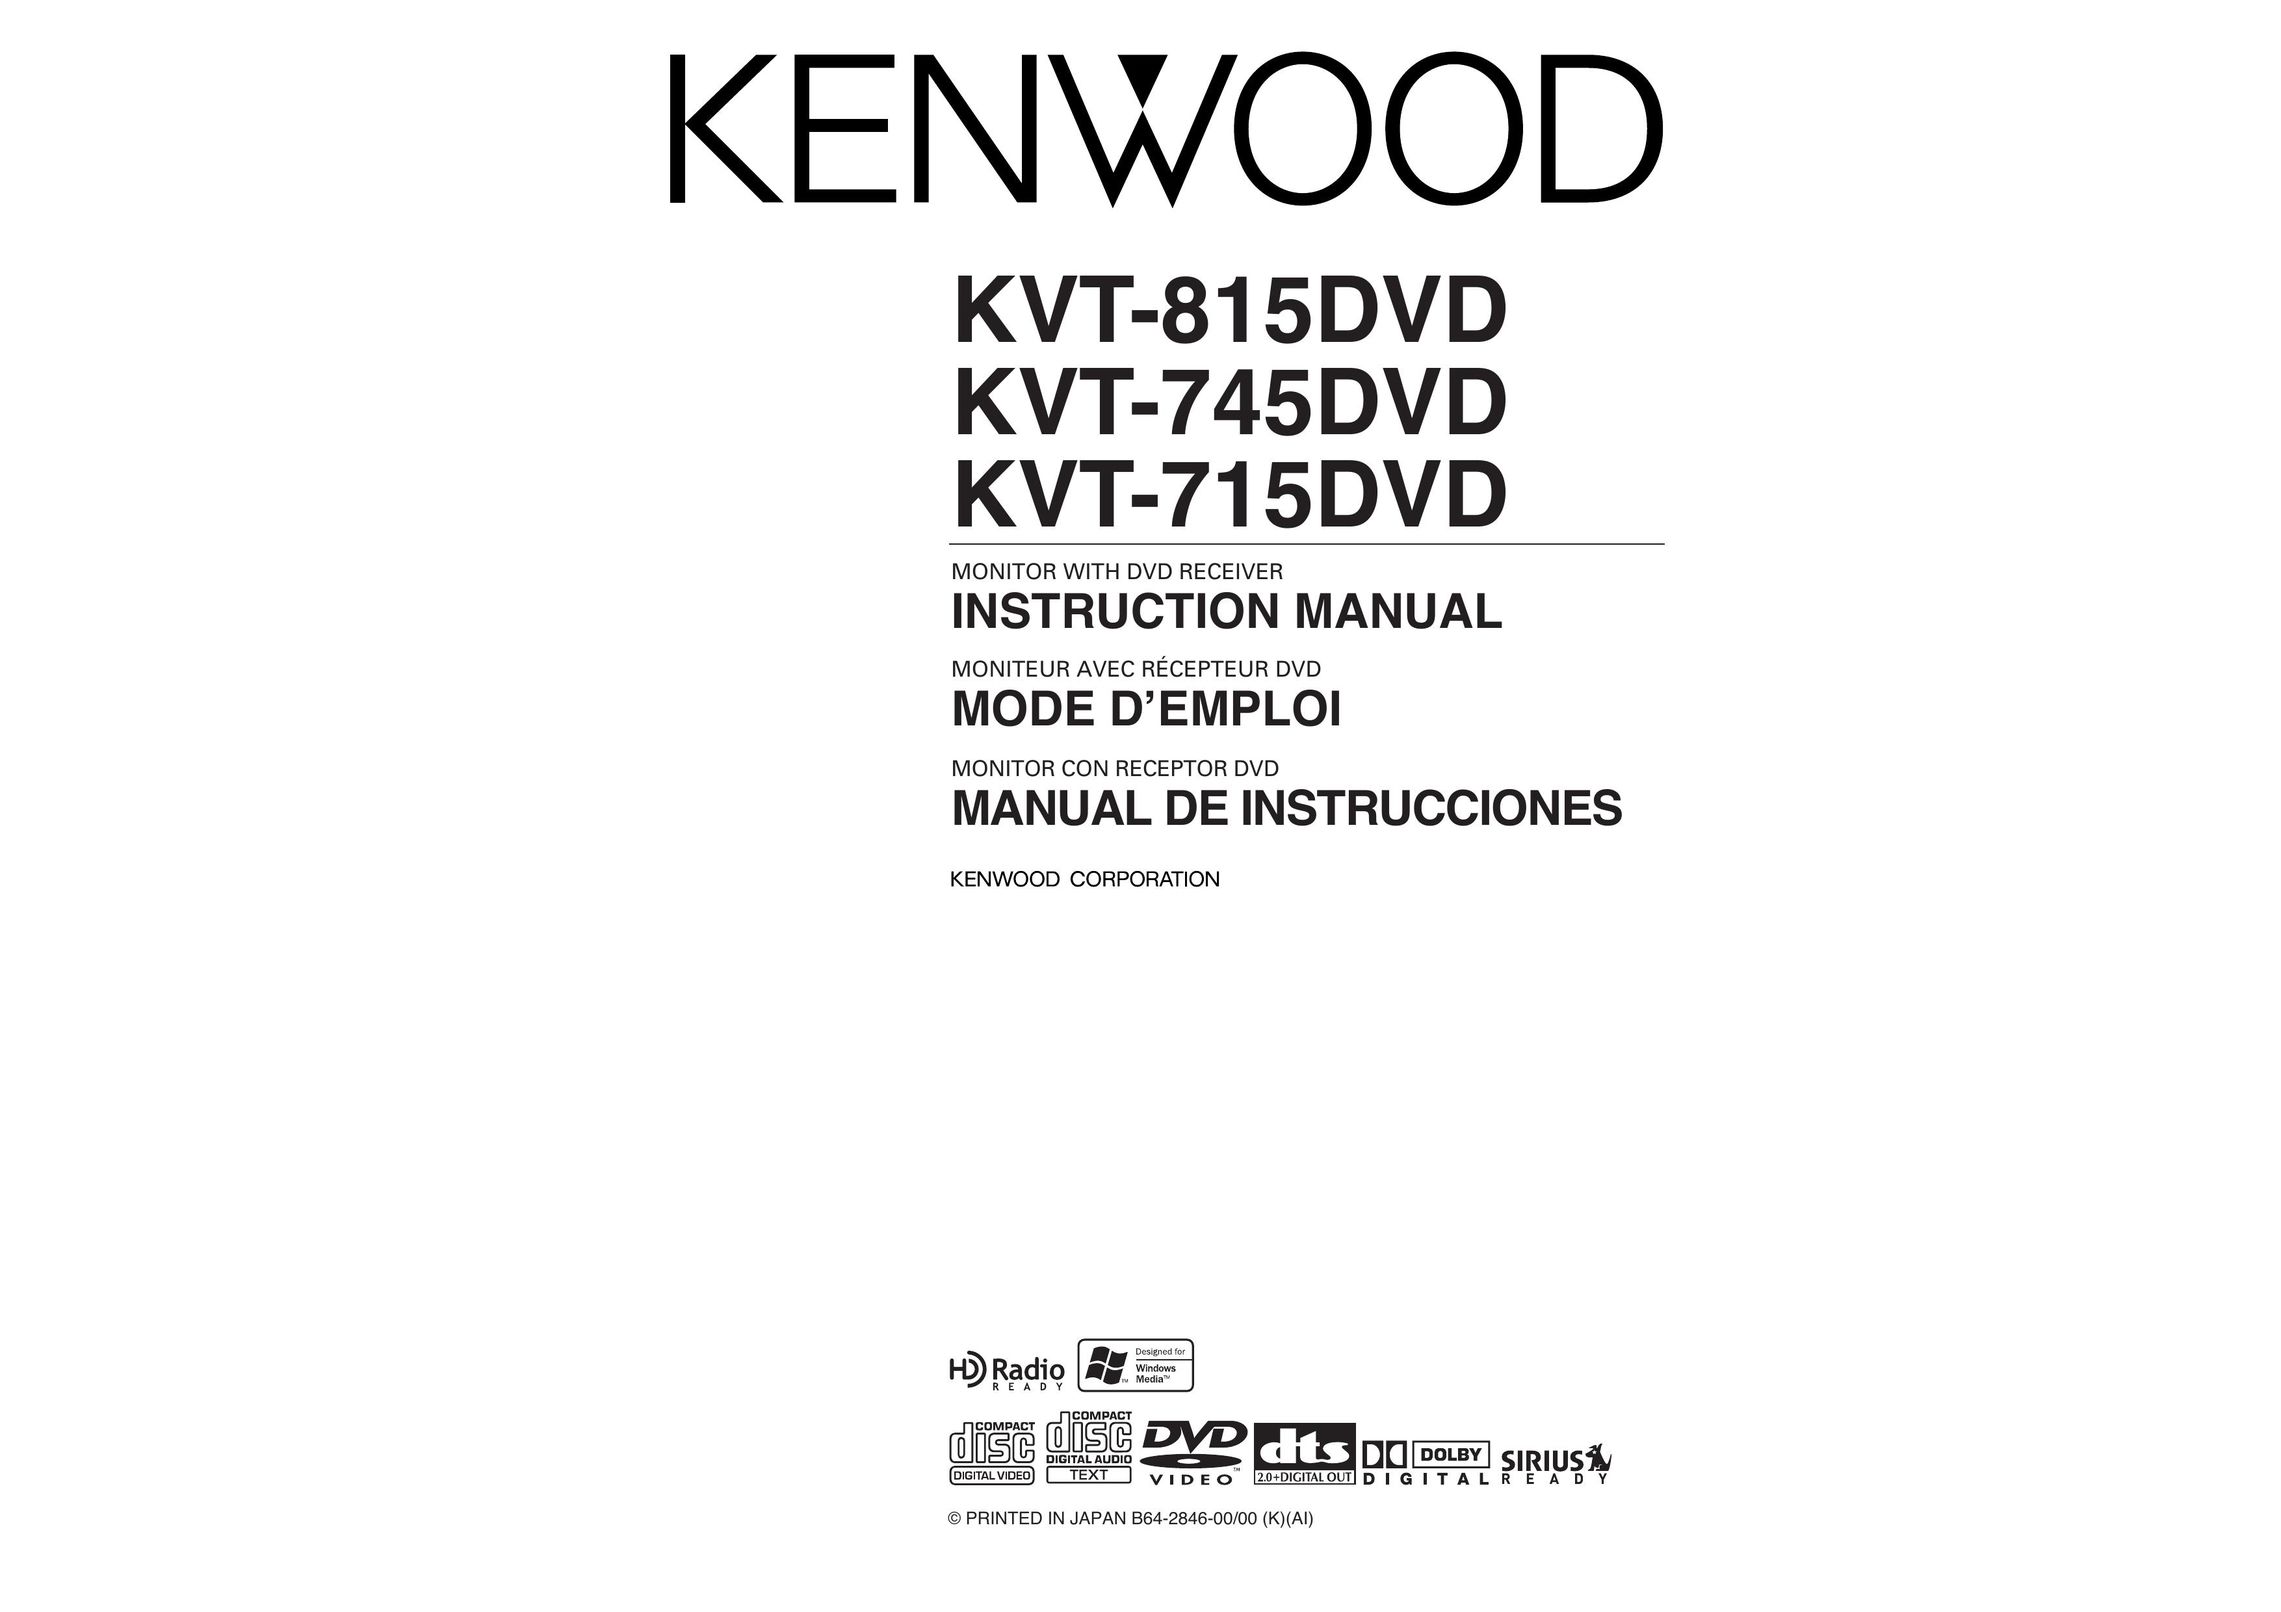 Kenwood KVT-745DVD Computer Monitor User Manual